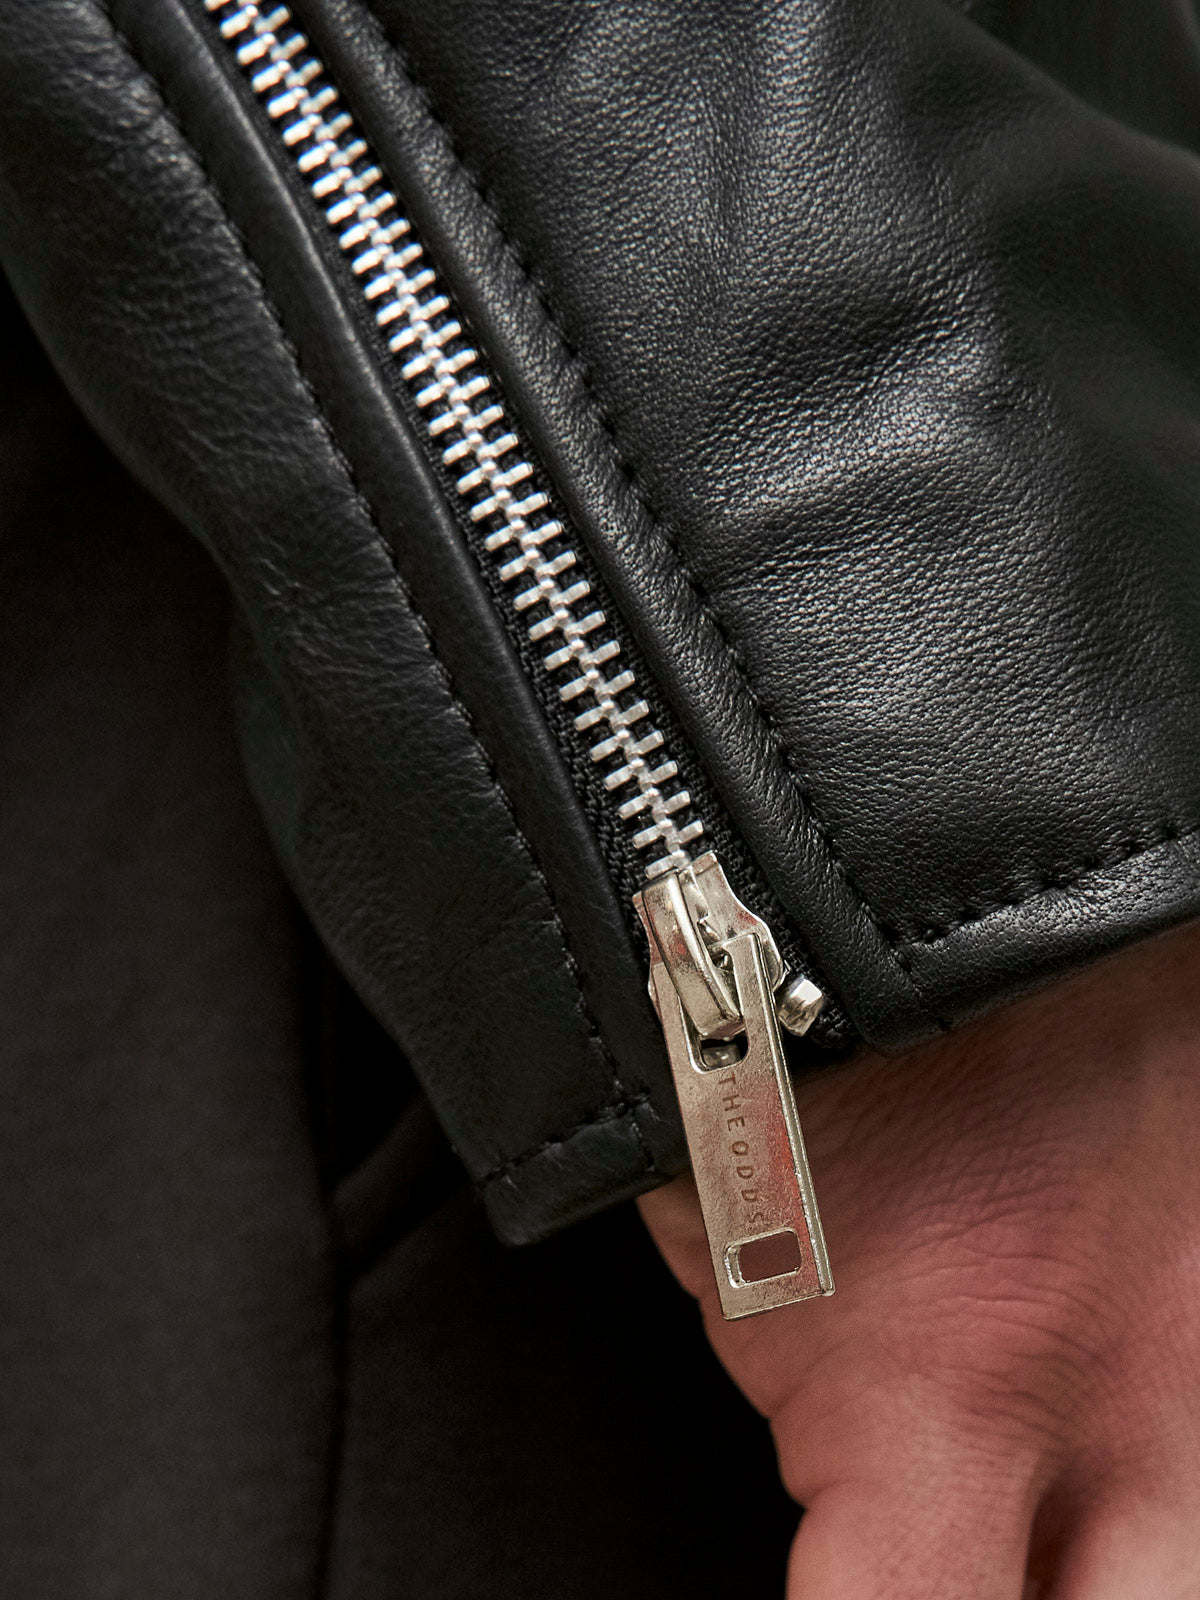 Carbon Matte Leather Jacket Men/ LMTD Edition